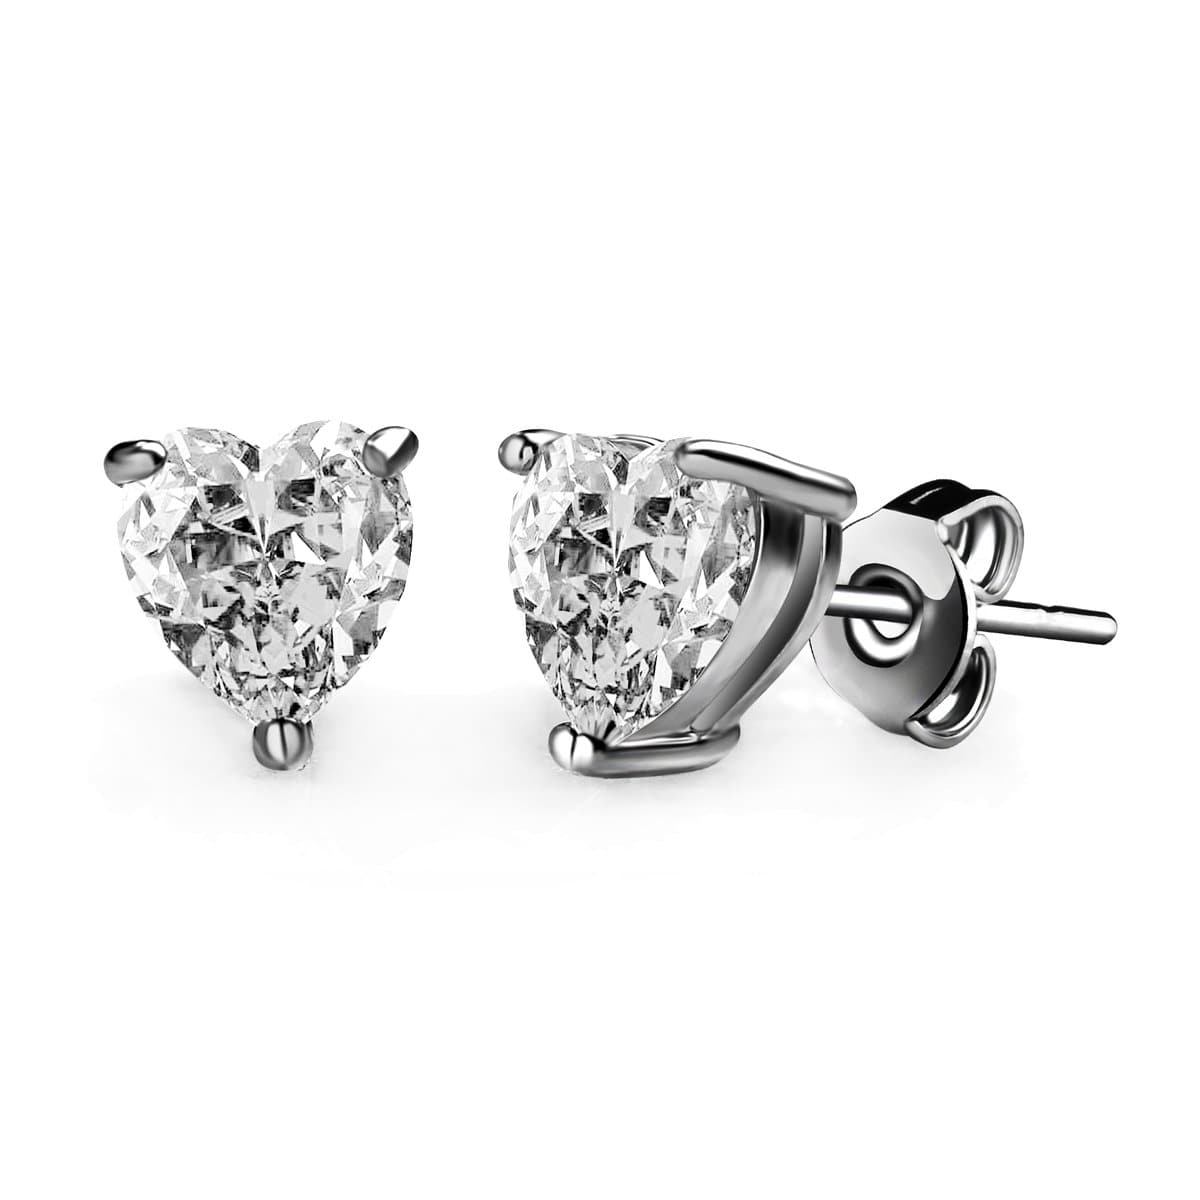 Heart Earrings Created with Zircondia® Crystals by Philip Jones Jewellery